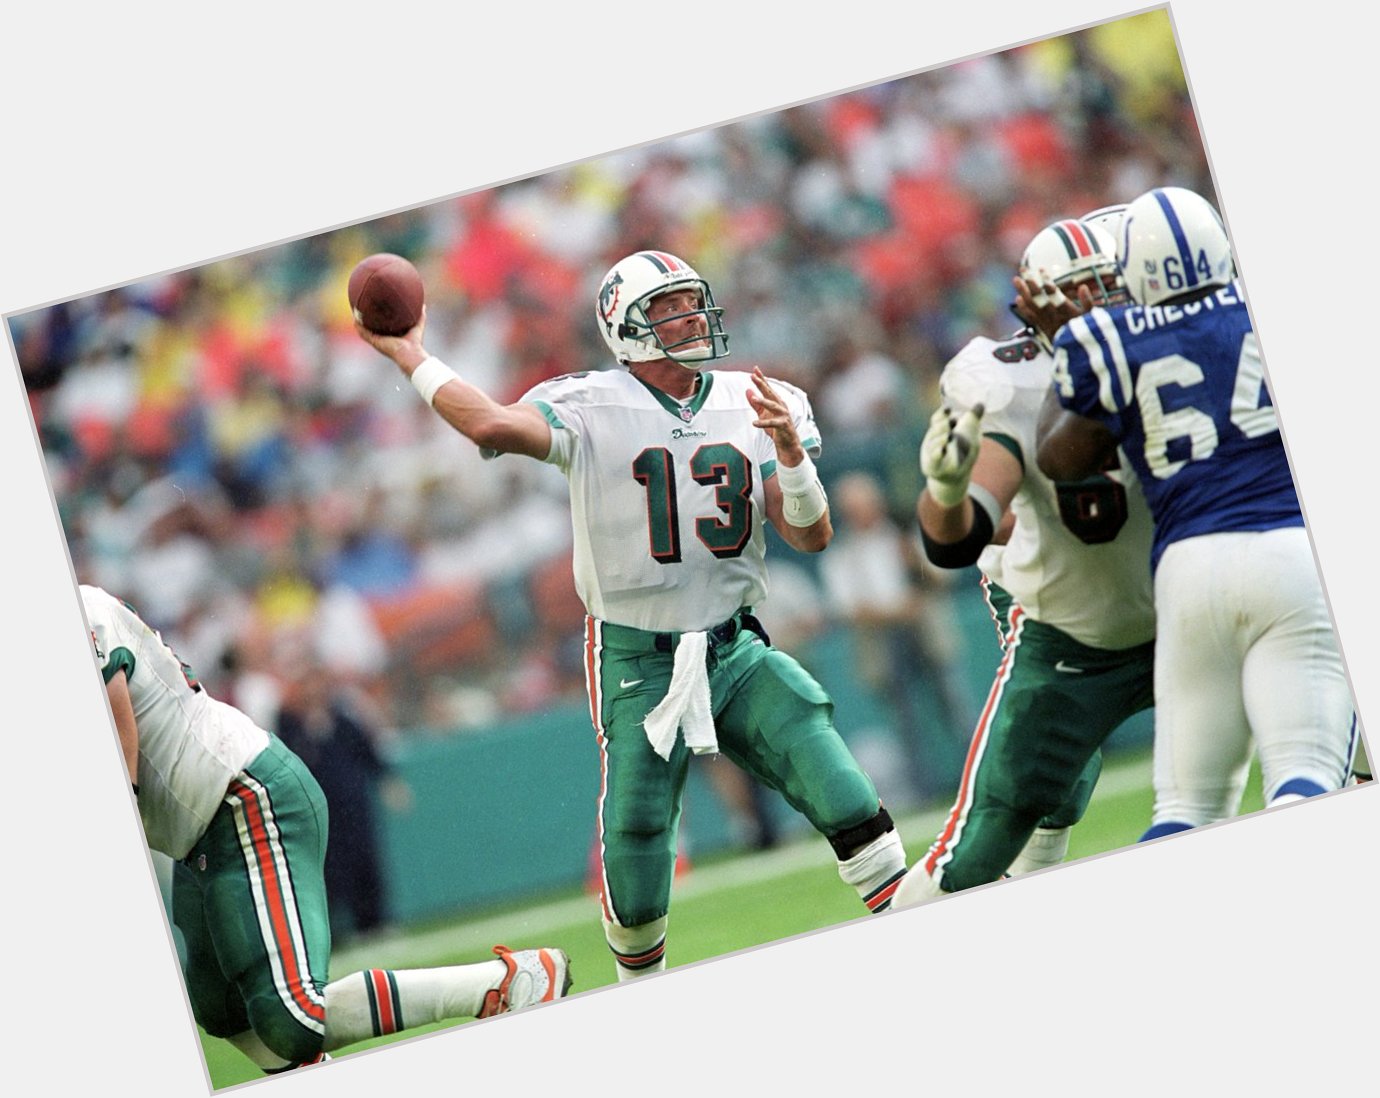 Happy birthday to and Miami Dolphins legend Dan Marino, the quarterback turns 56 today! 